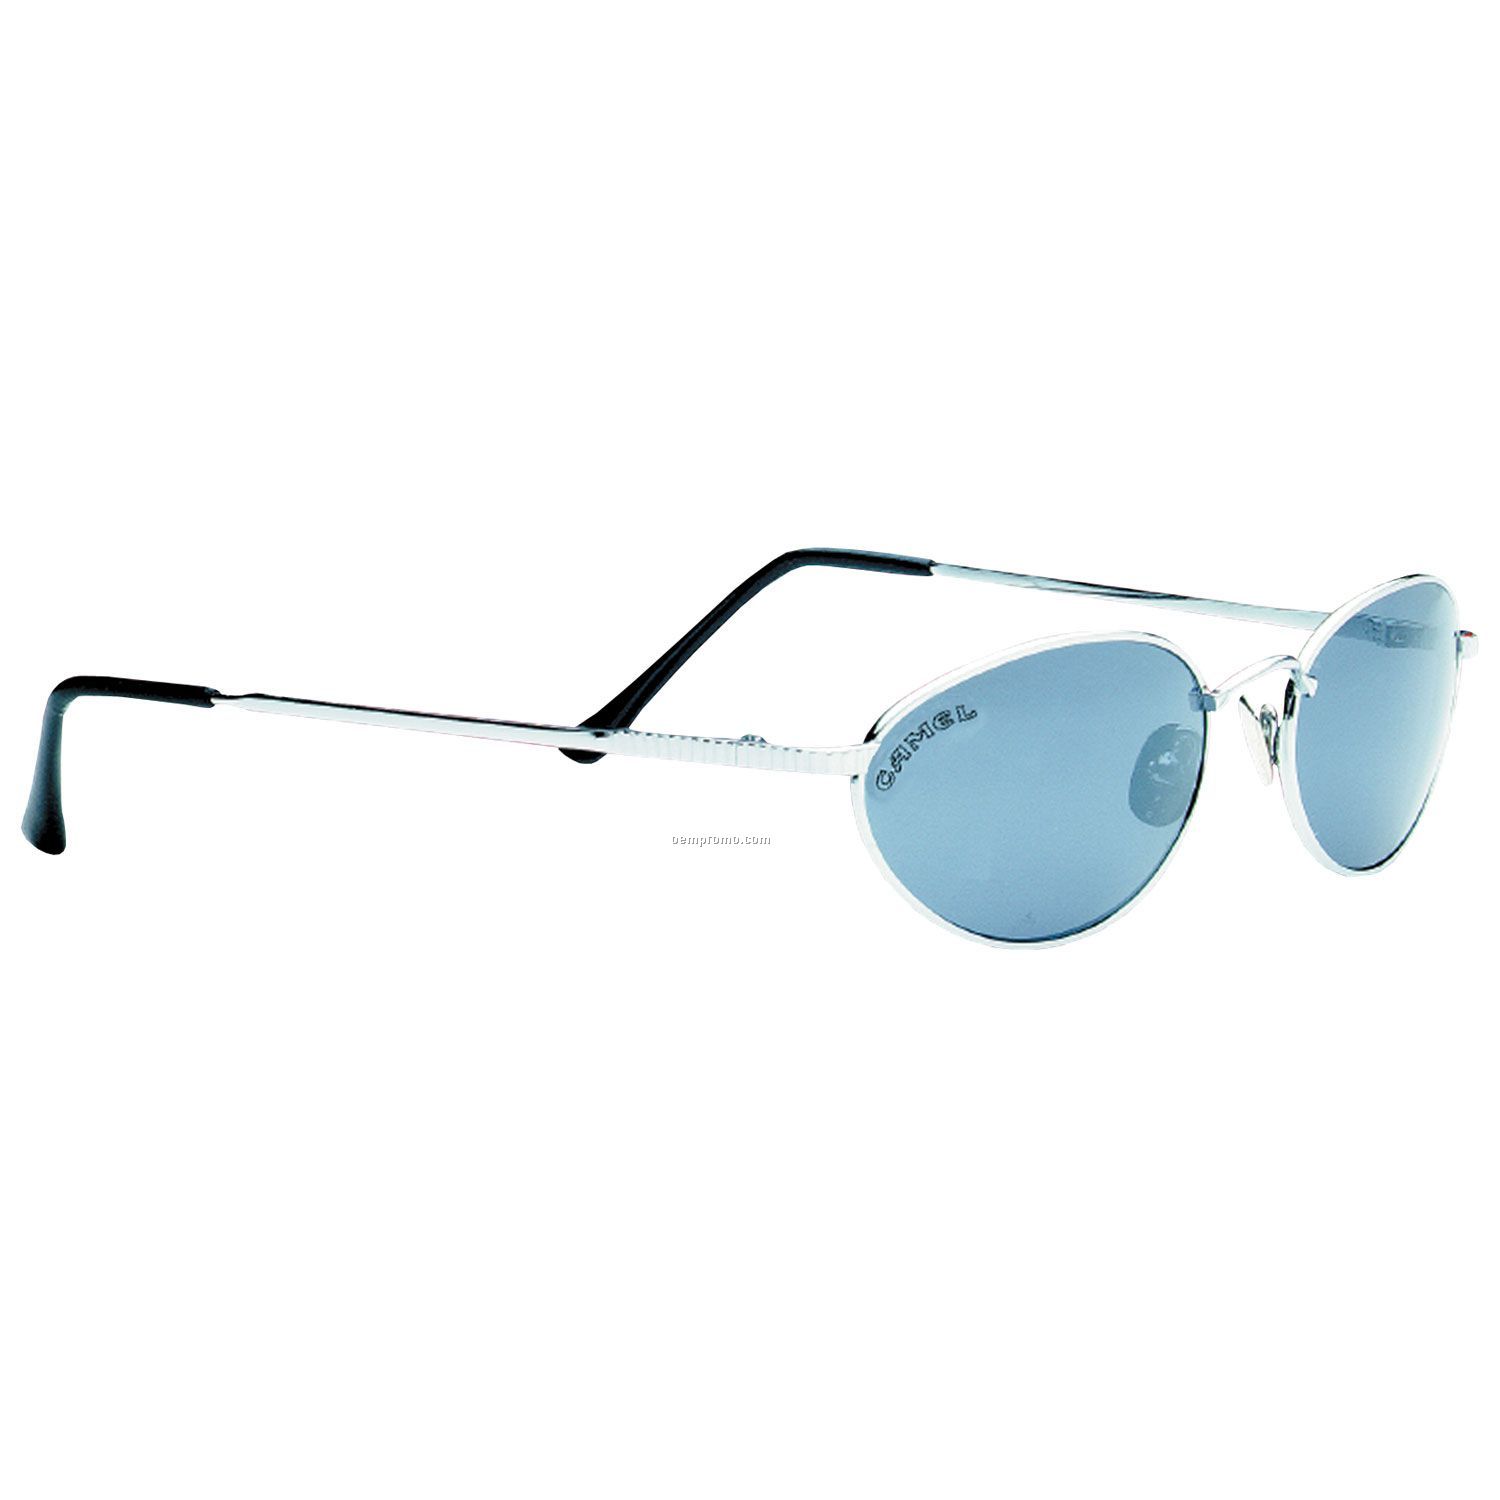 Rio Metals Resort Metal Silver Frame Sunglasses W/ Smoke Lens